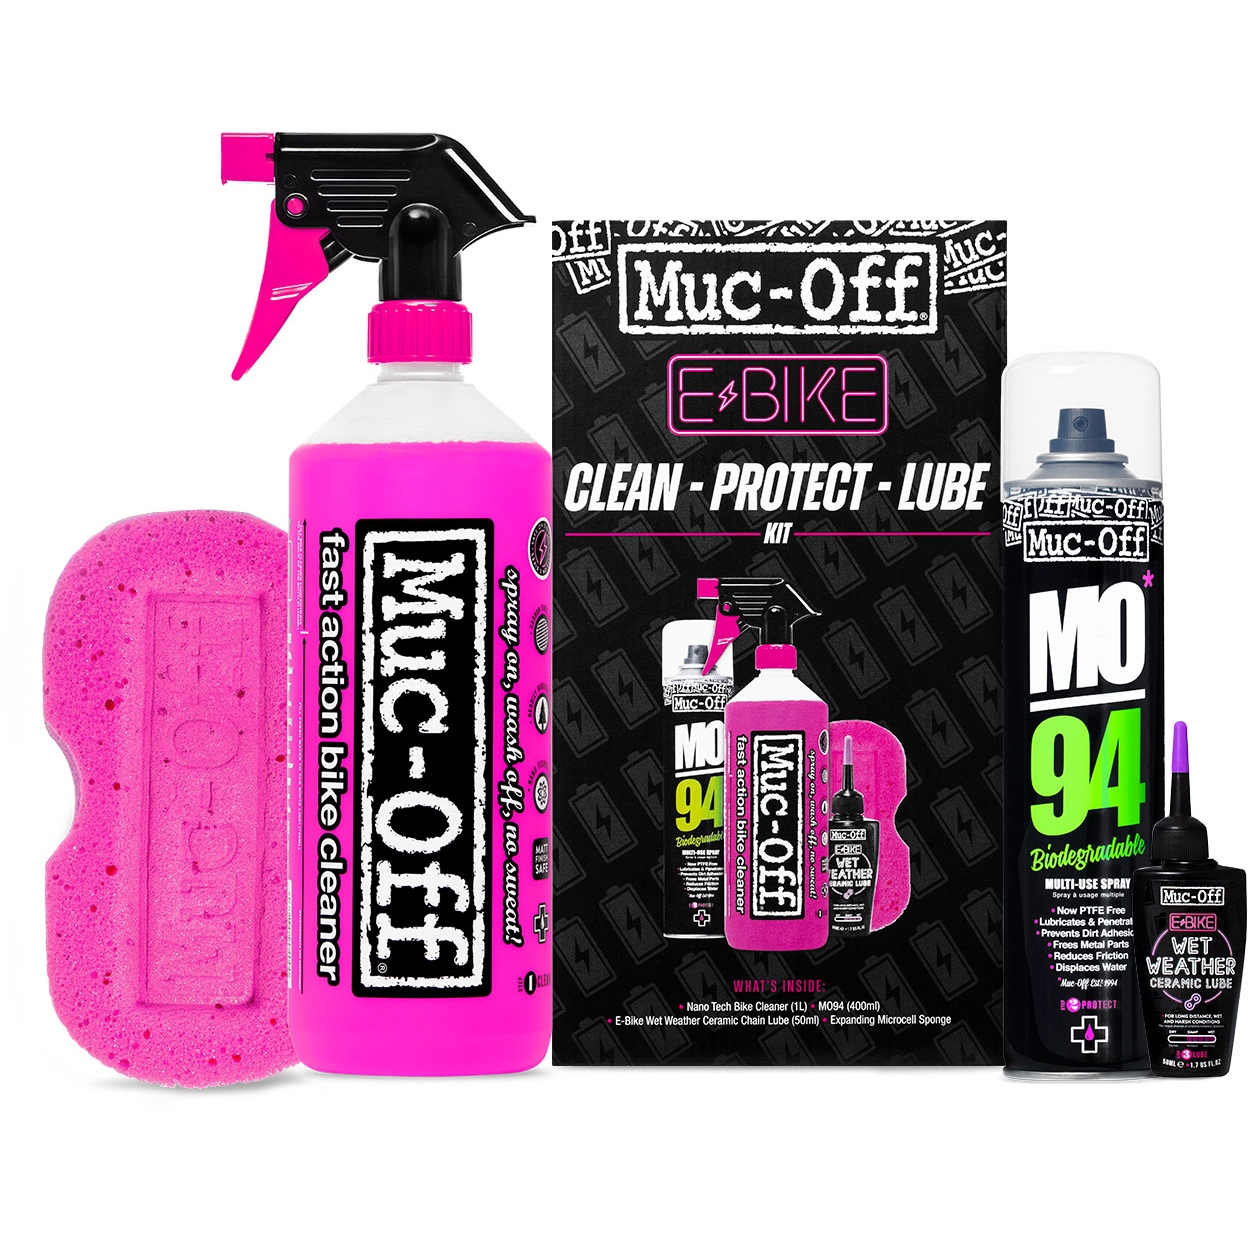 Productfoto van Muc-Off E-Bike Clean - Protect &amp; Lube Kit (Wet Lube Version) - black